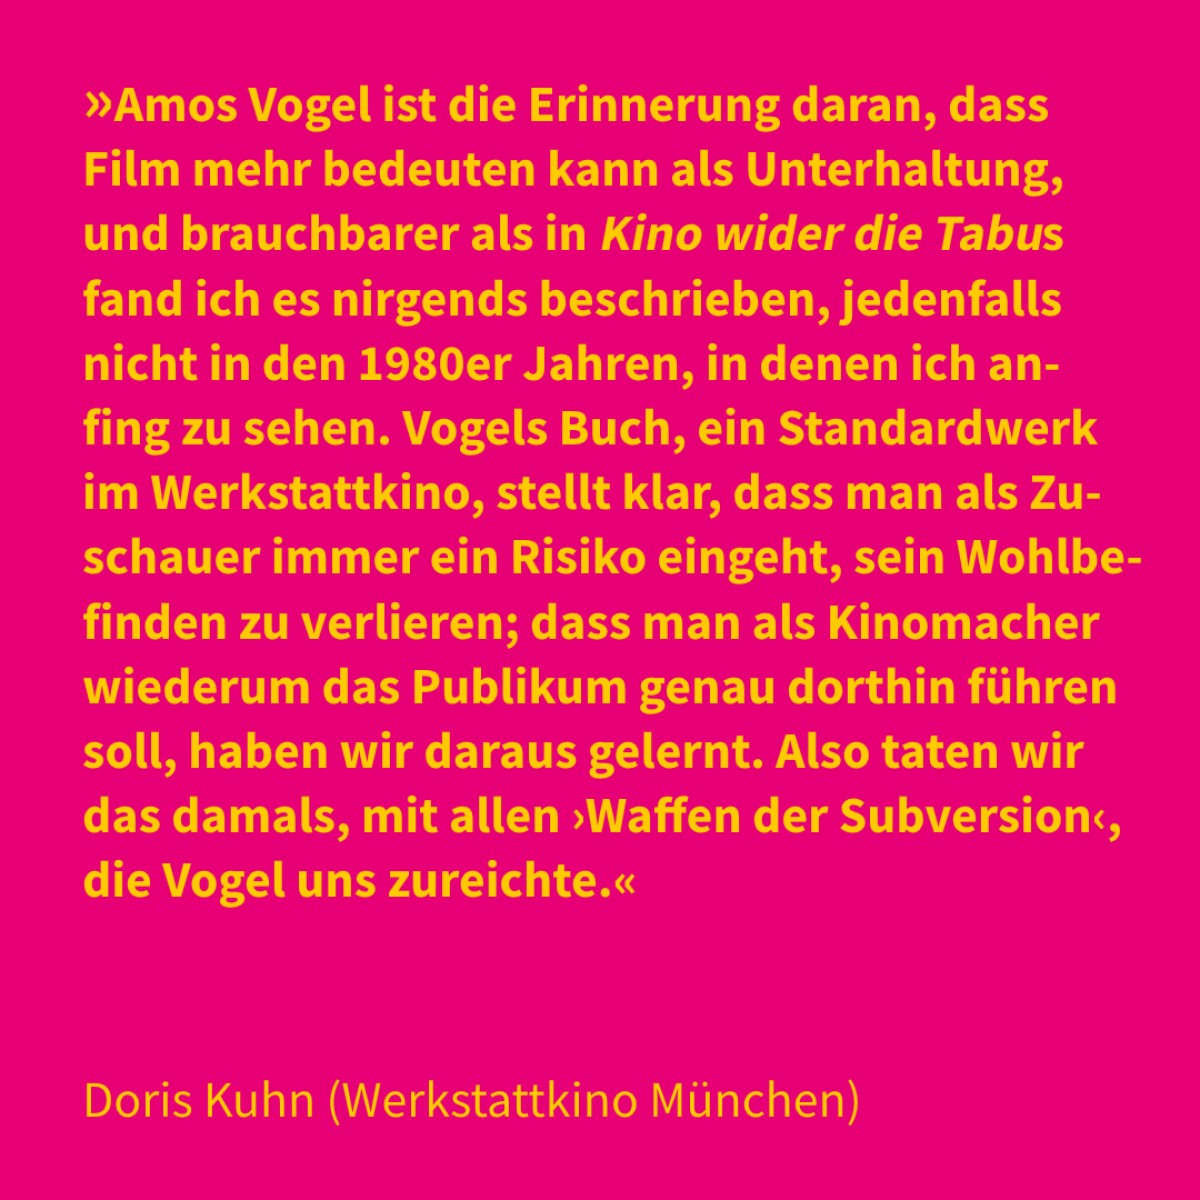 Doris Kuhn (Werkstattkino München)